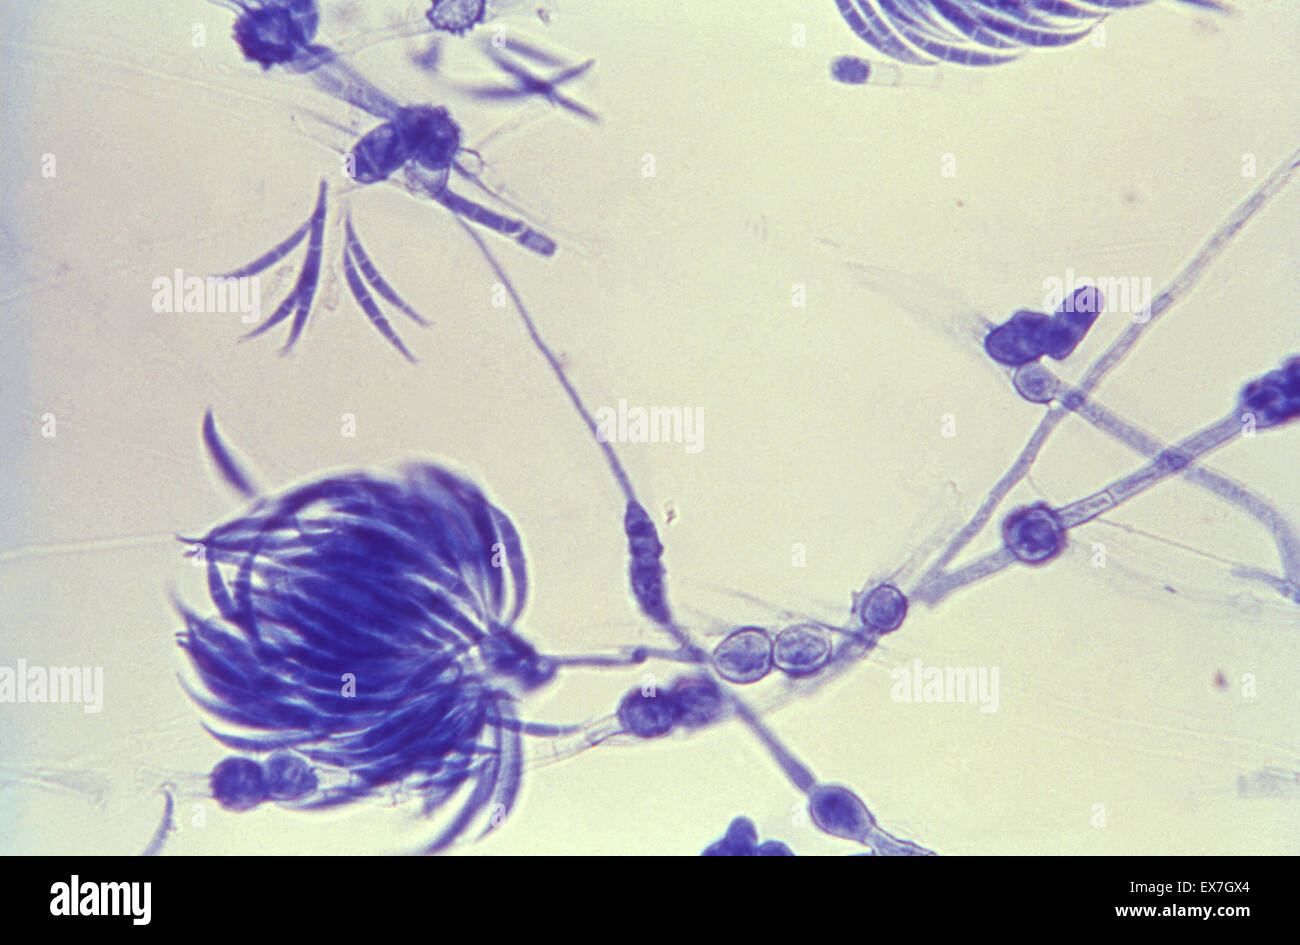 Lactophenol cotton blue-stained Fusarium fungal organism. Stock Photo